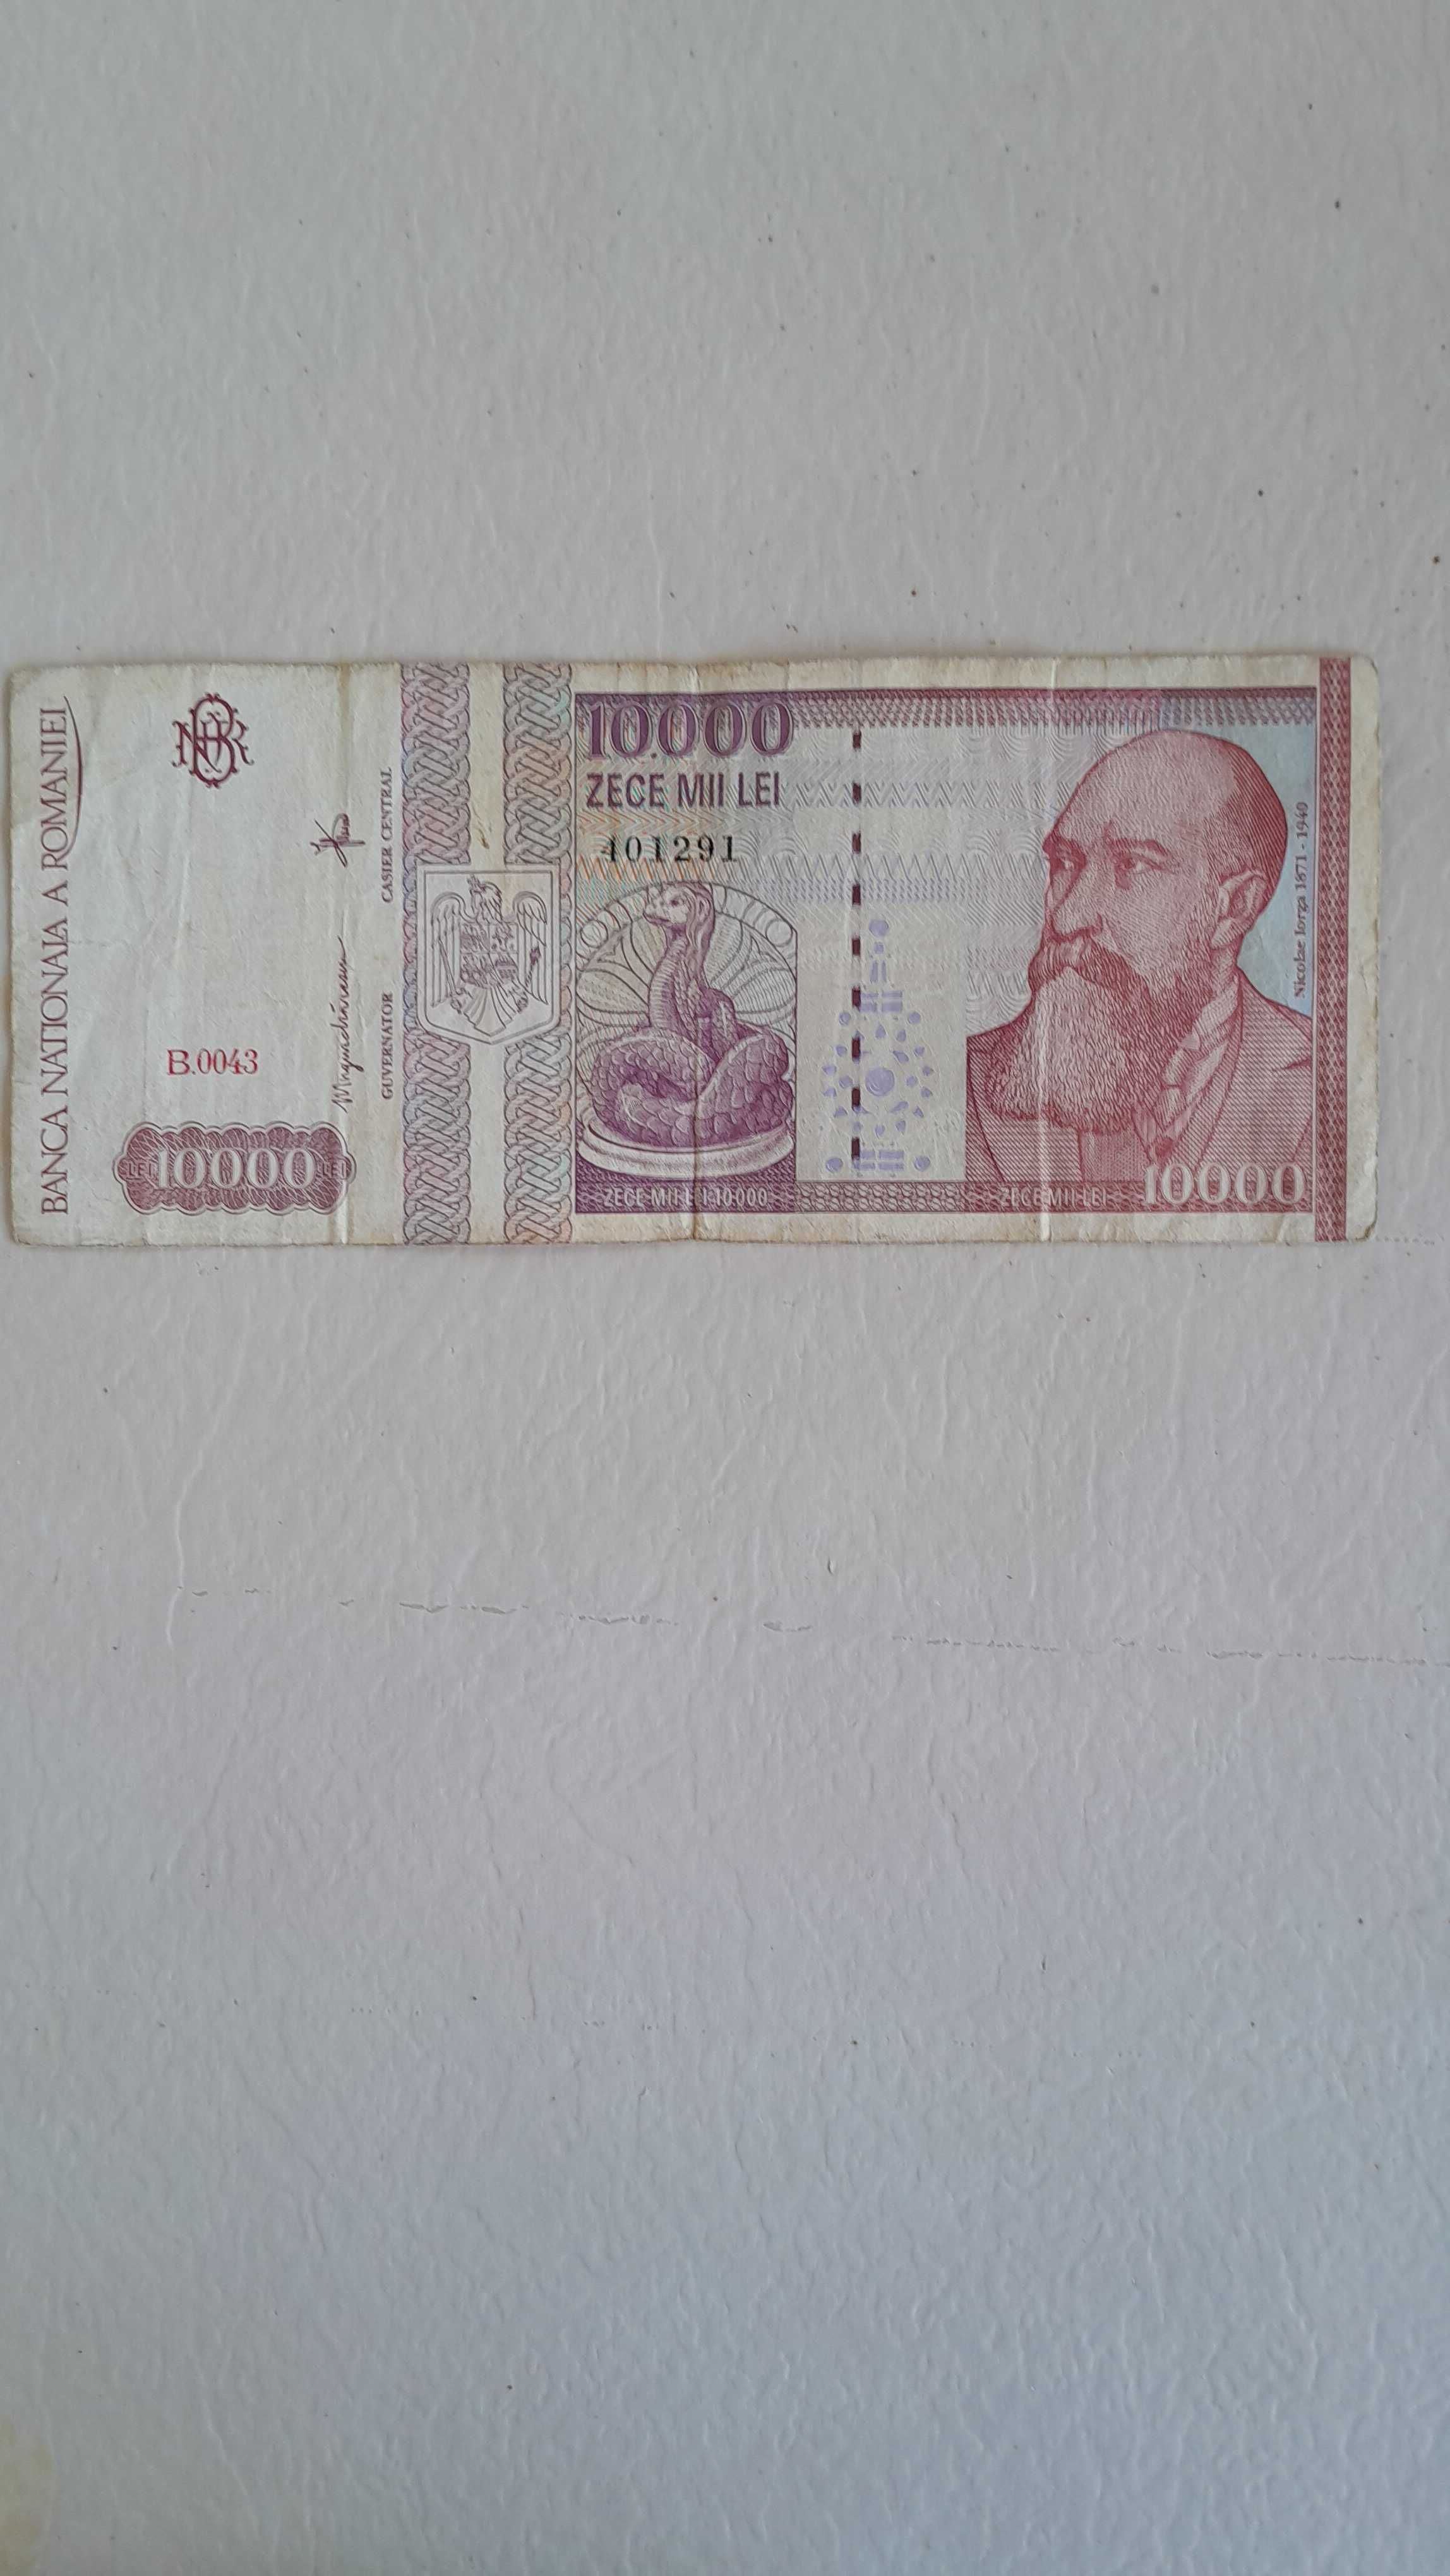 Bancnote romanesti dupa 1990